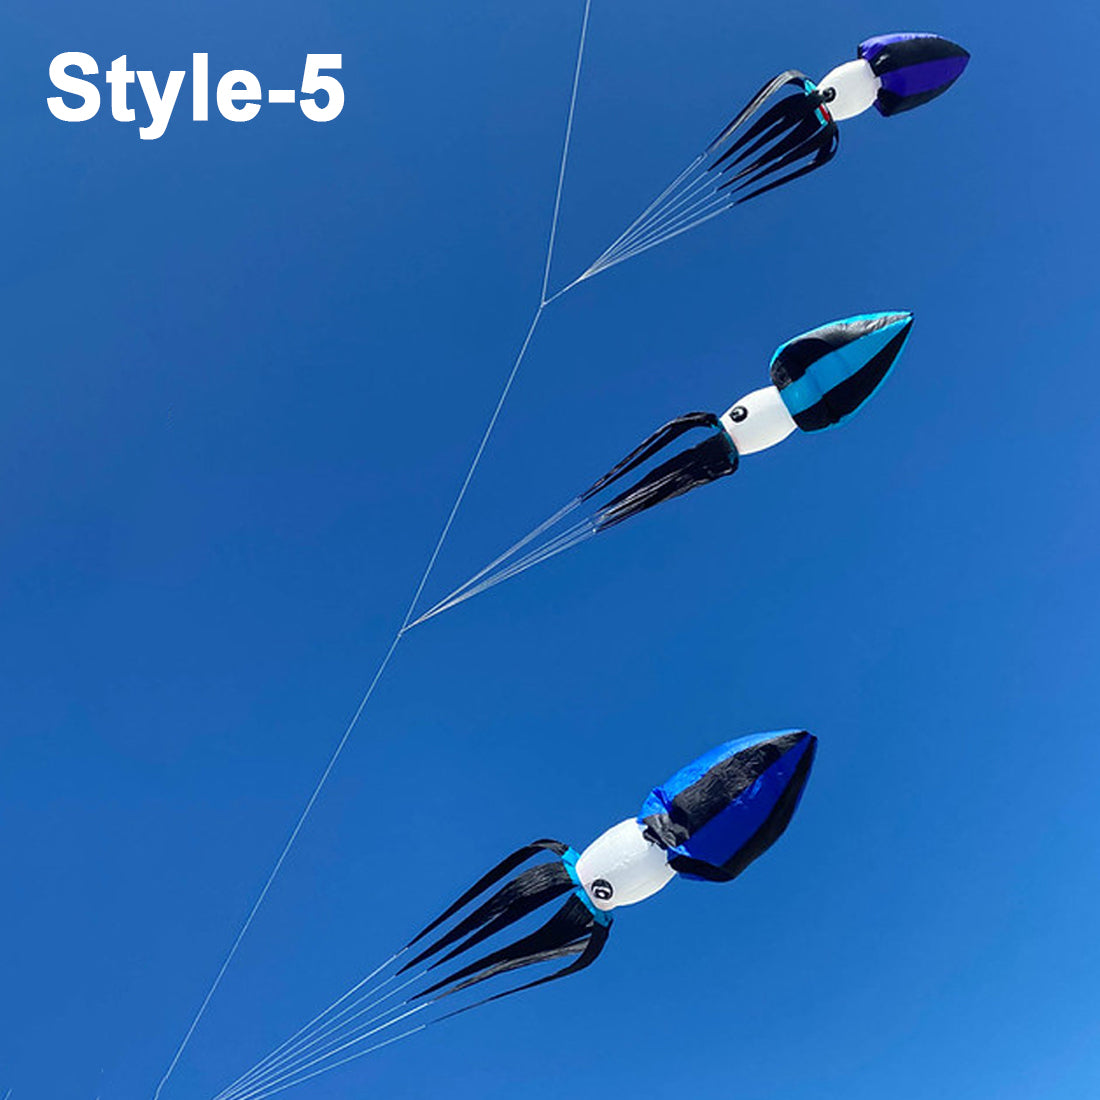 2m Snake Spinning Windsock Ring Kite Line Laundry for 30D Ripstop Nylon  with Bag